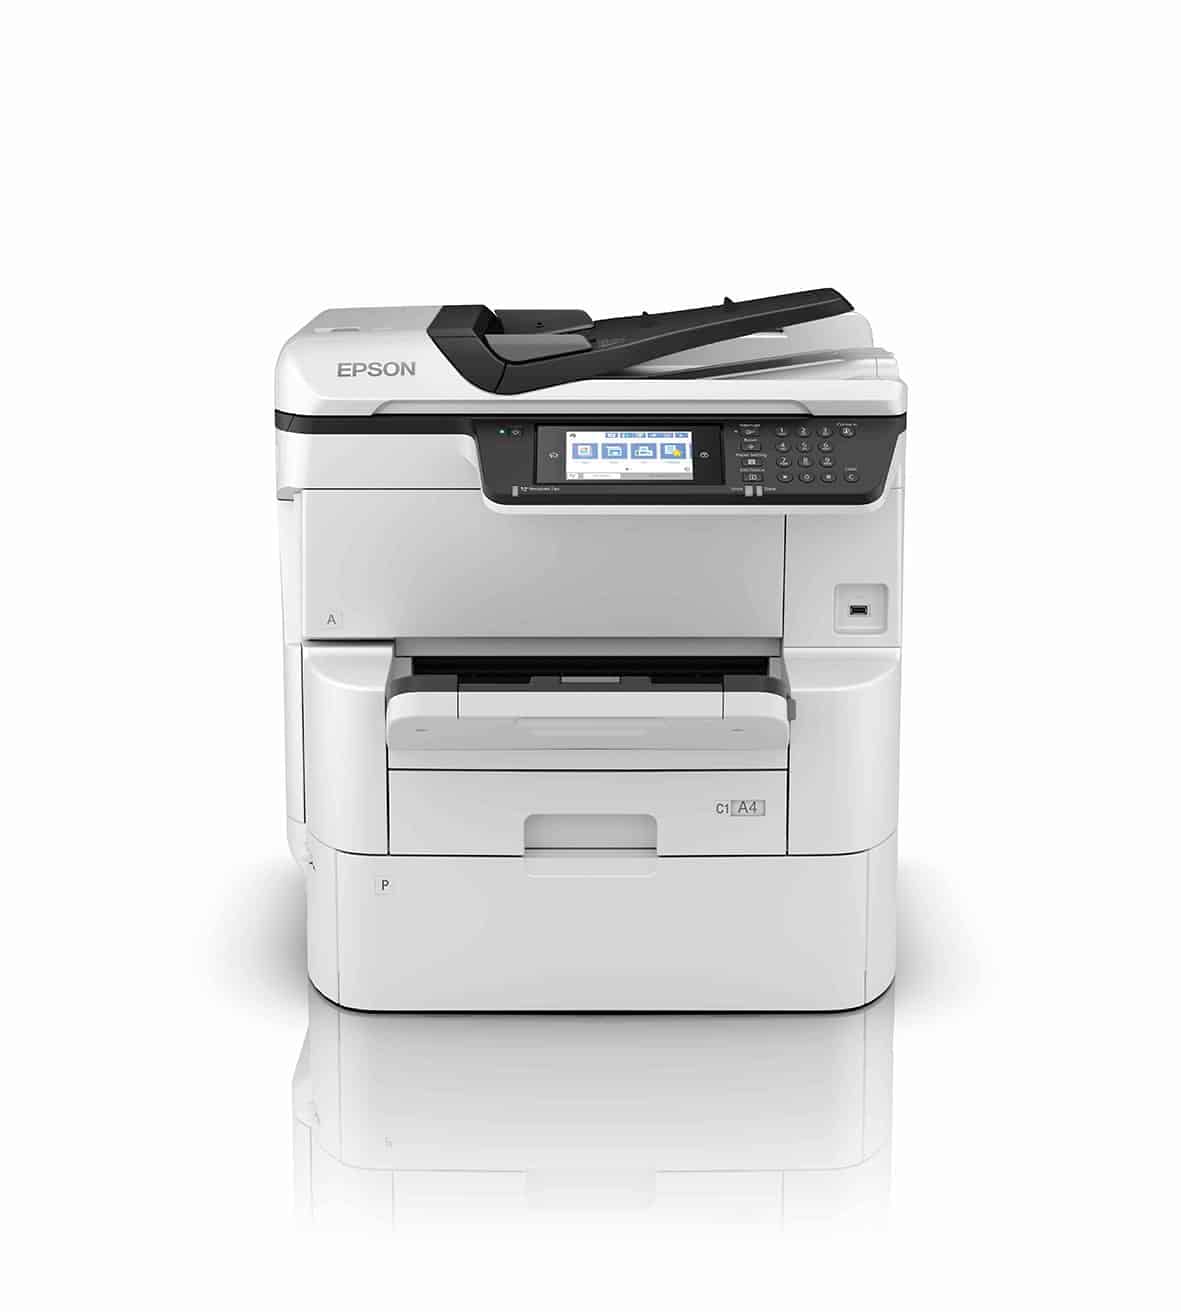 epson printer image001